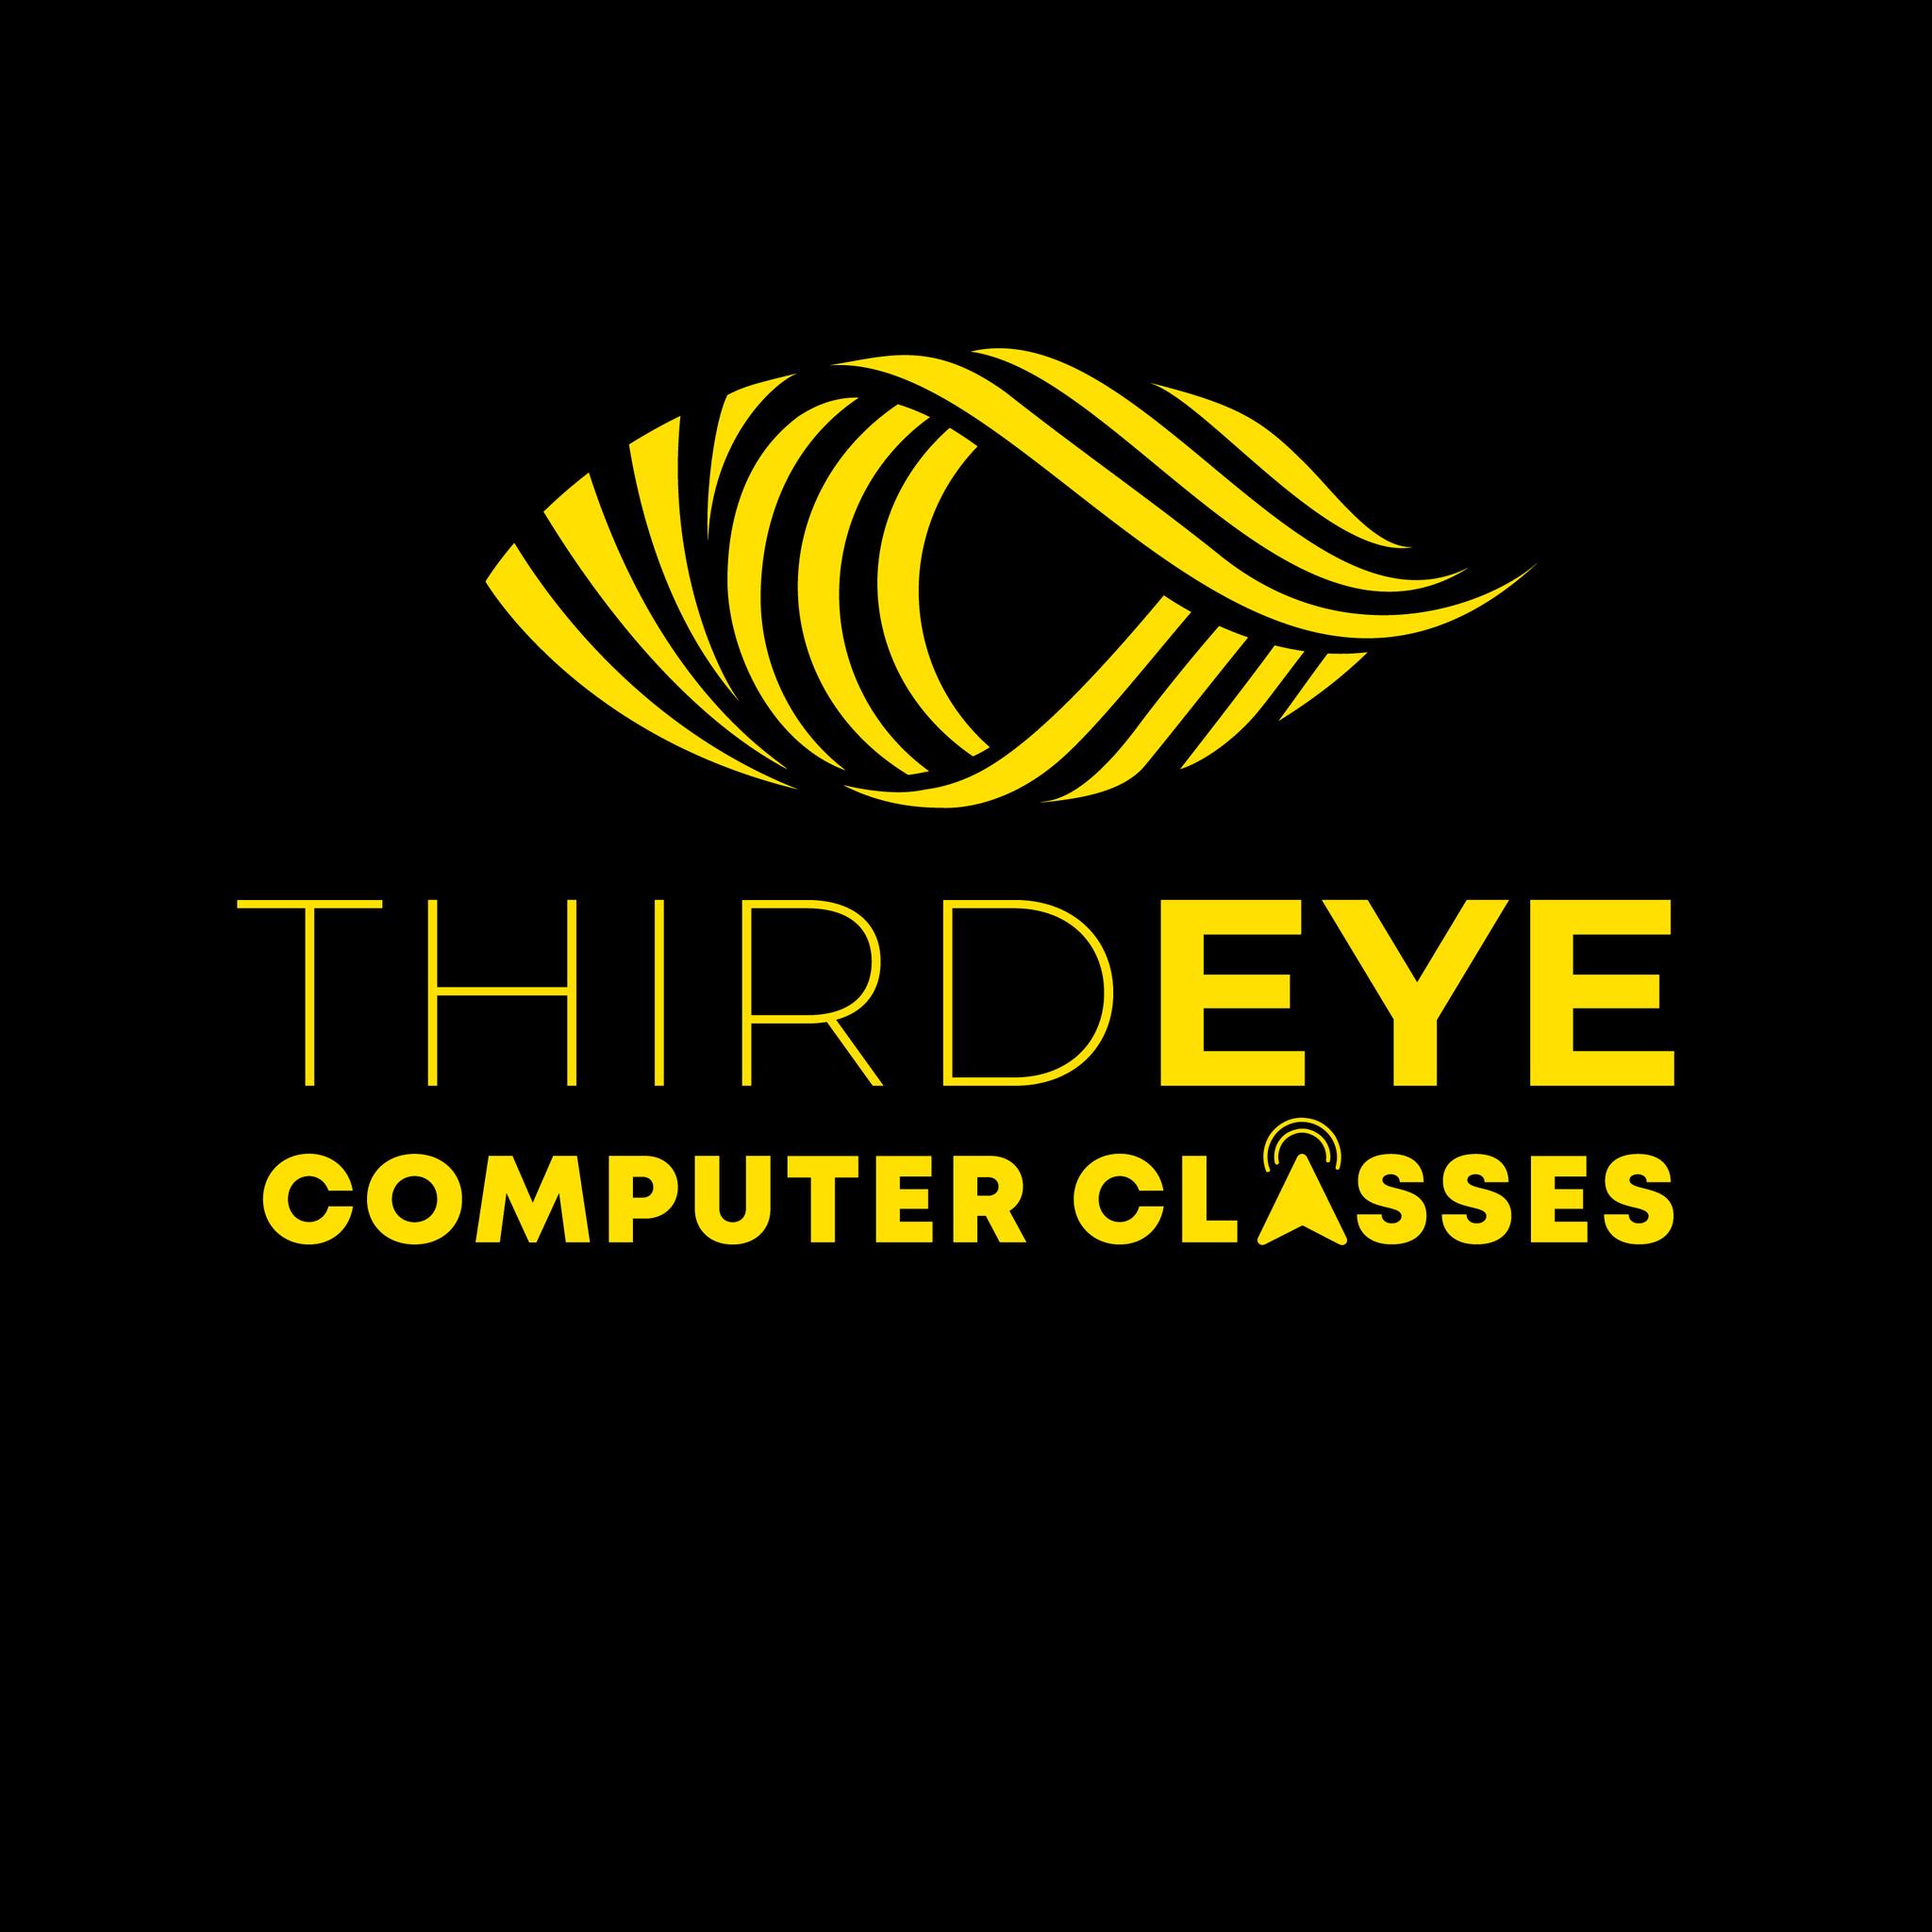 Thirdeye Computer Classes Logo